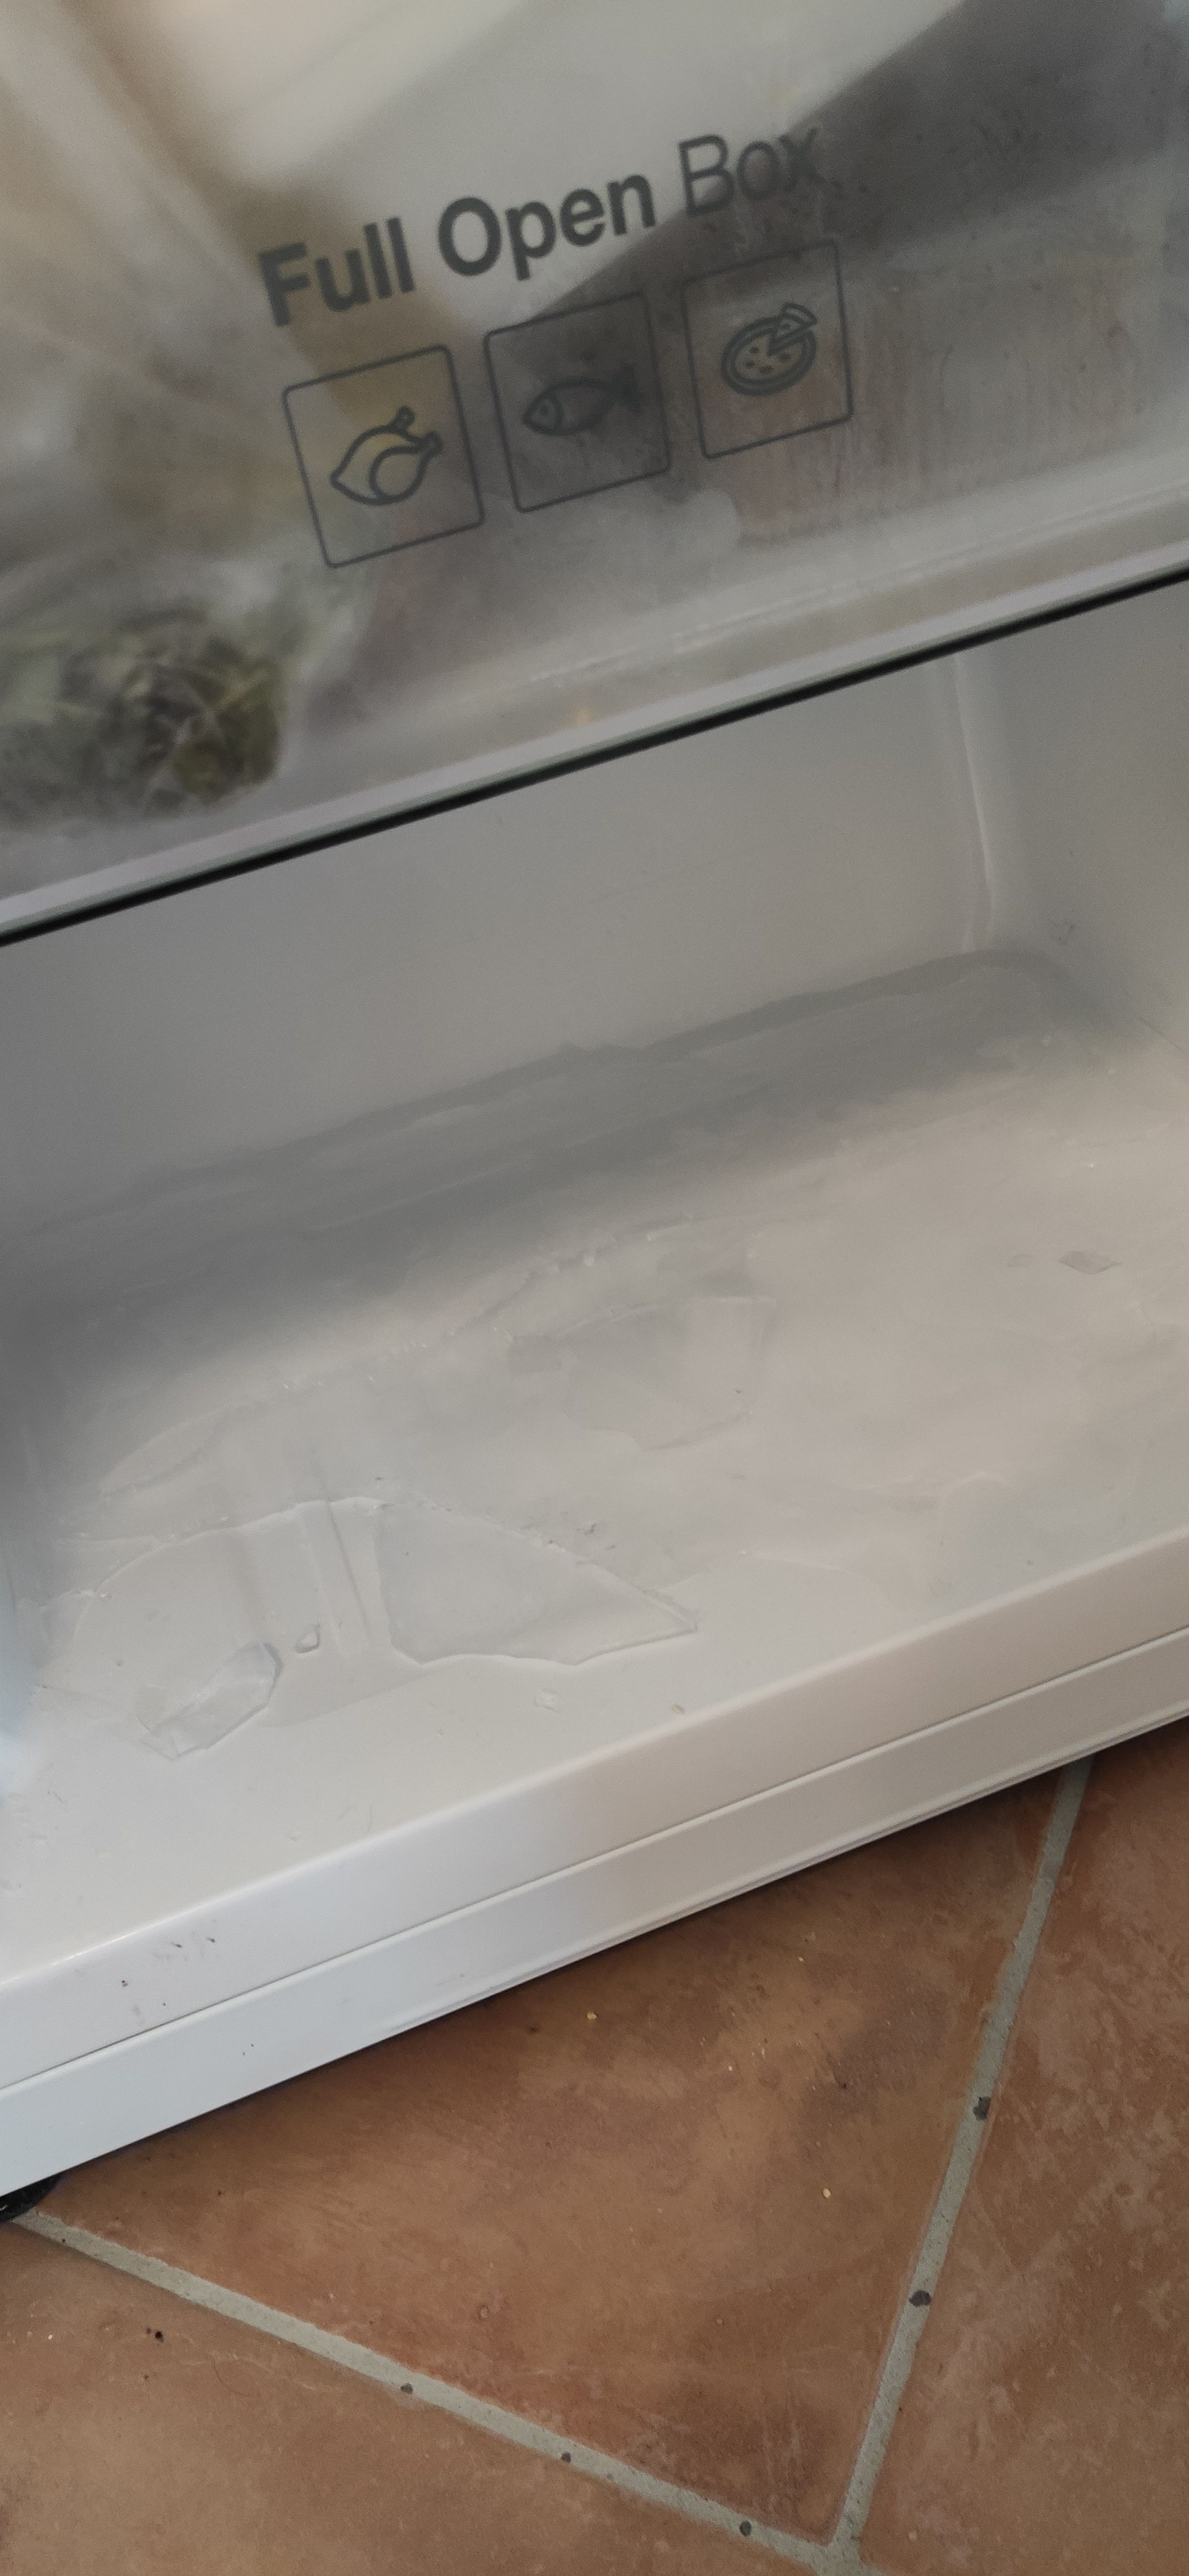 Frig no frost RL52VEBIH ghiaccio nel freezer - Samsung Community